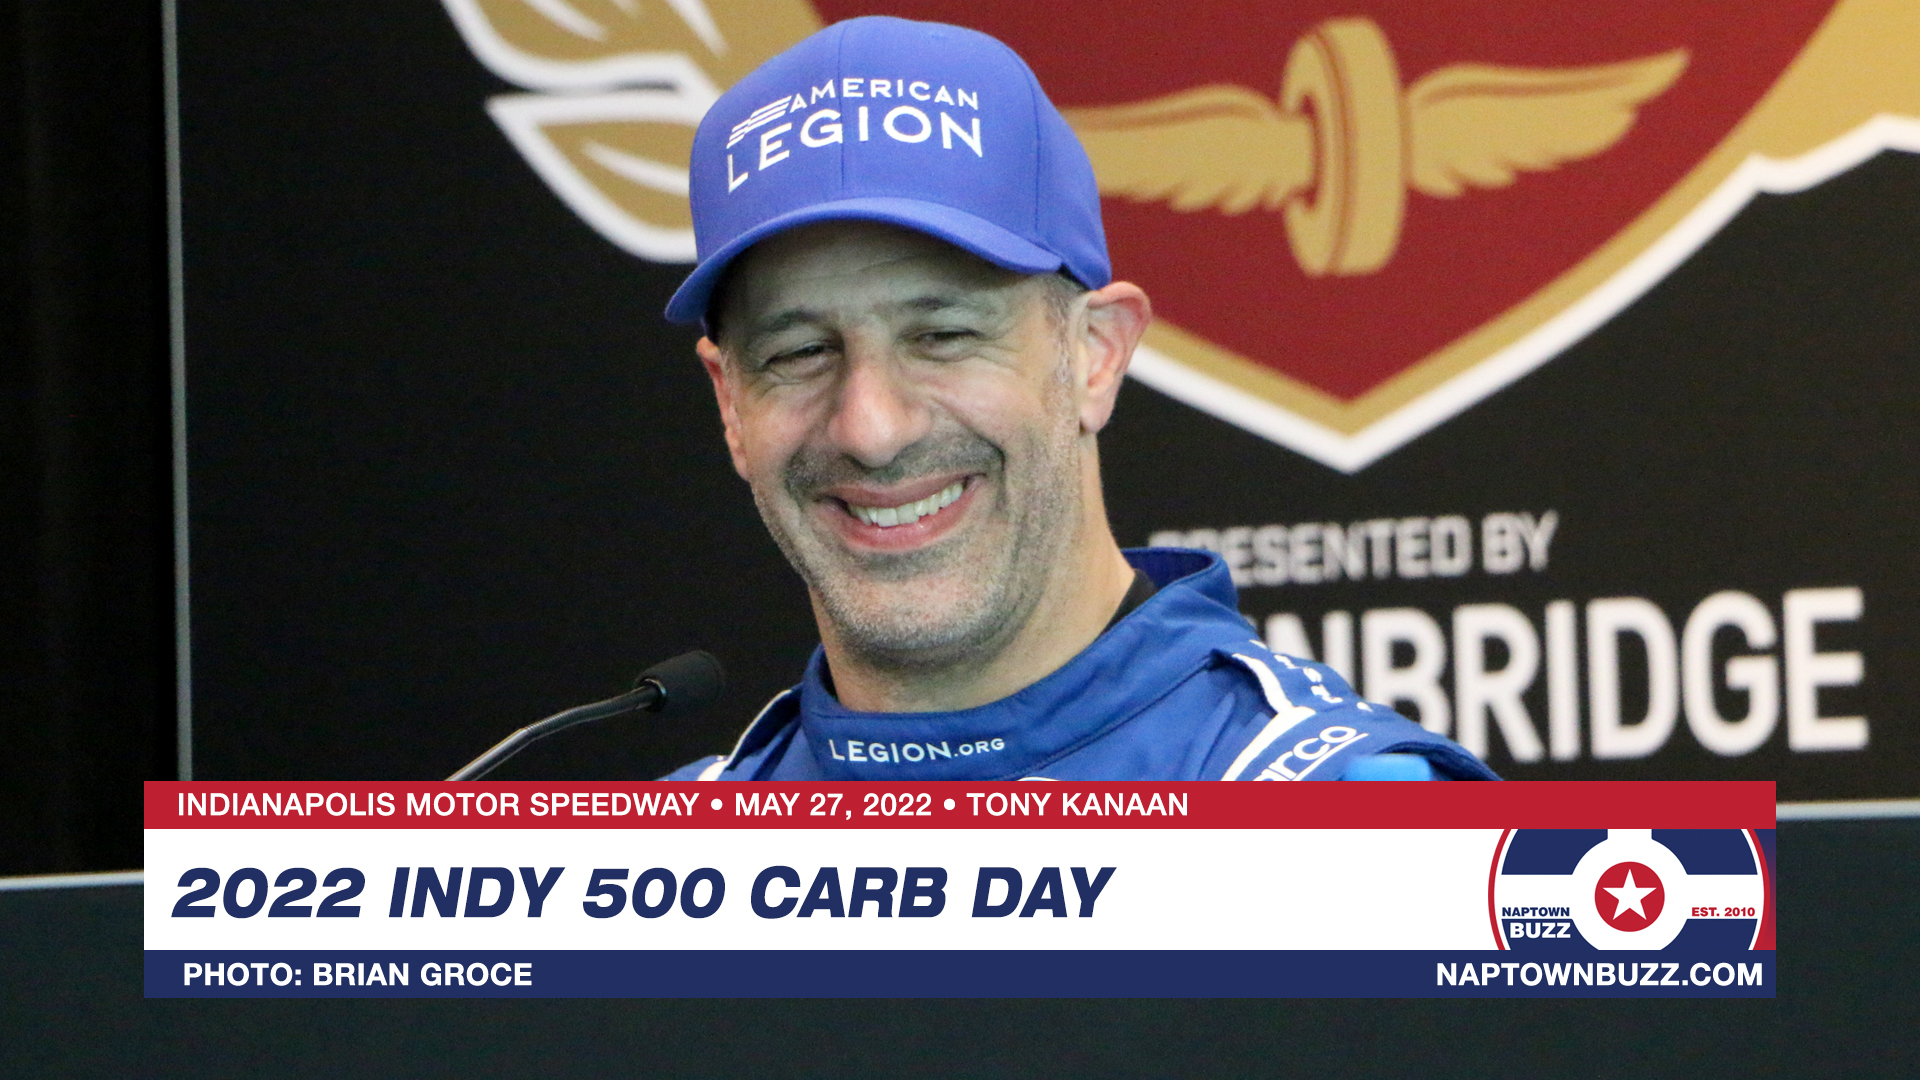 Indy 500 Carb Day May 27, 2022 Tony Kanaan